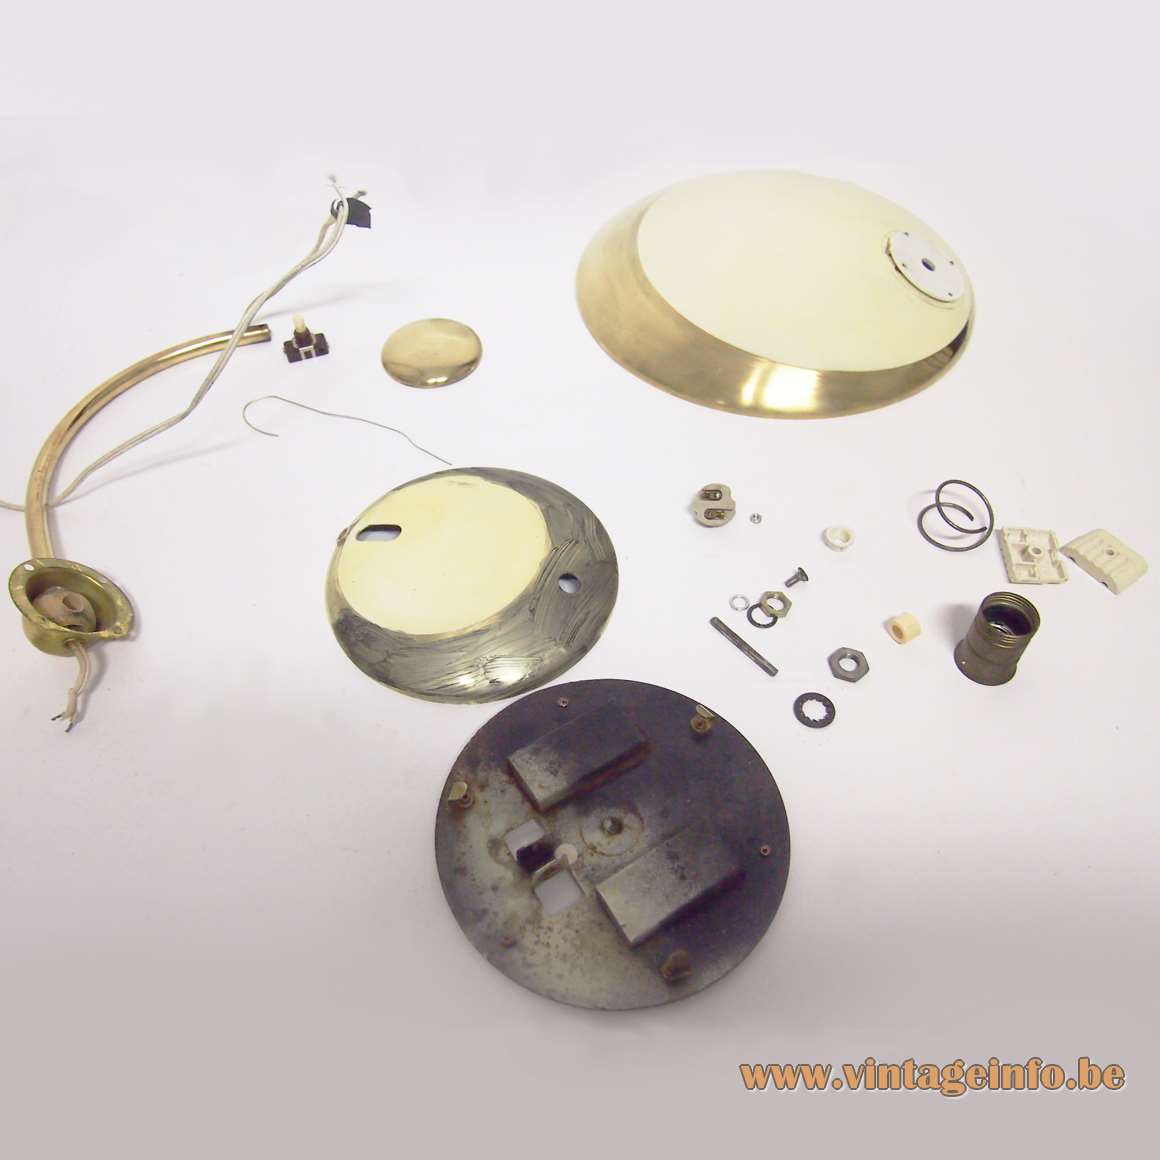 Helo Leuchten brass desk lamp curved rod round mushroom lampshade & base cream vanilla paint 1950s 1960s